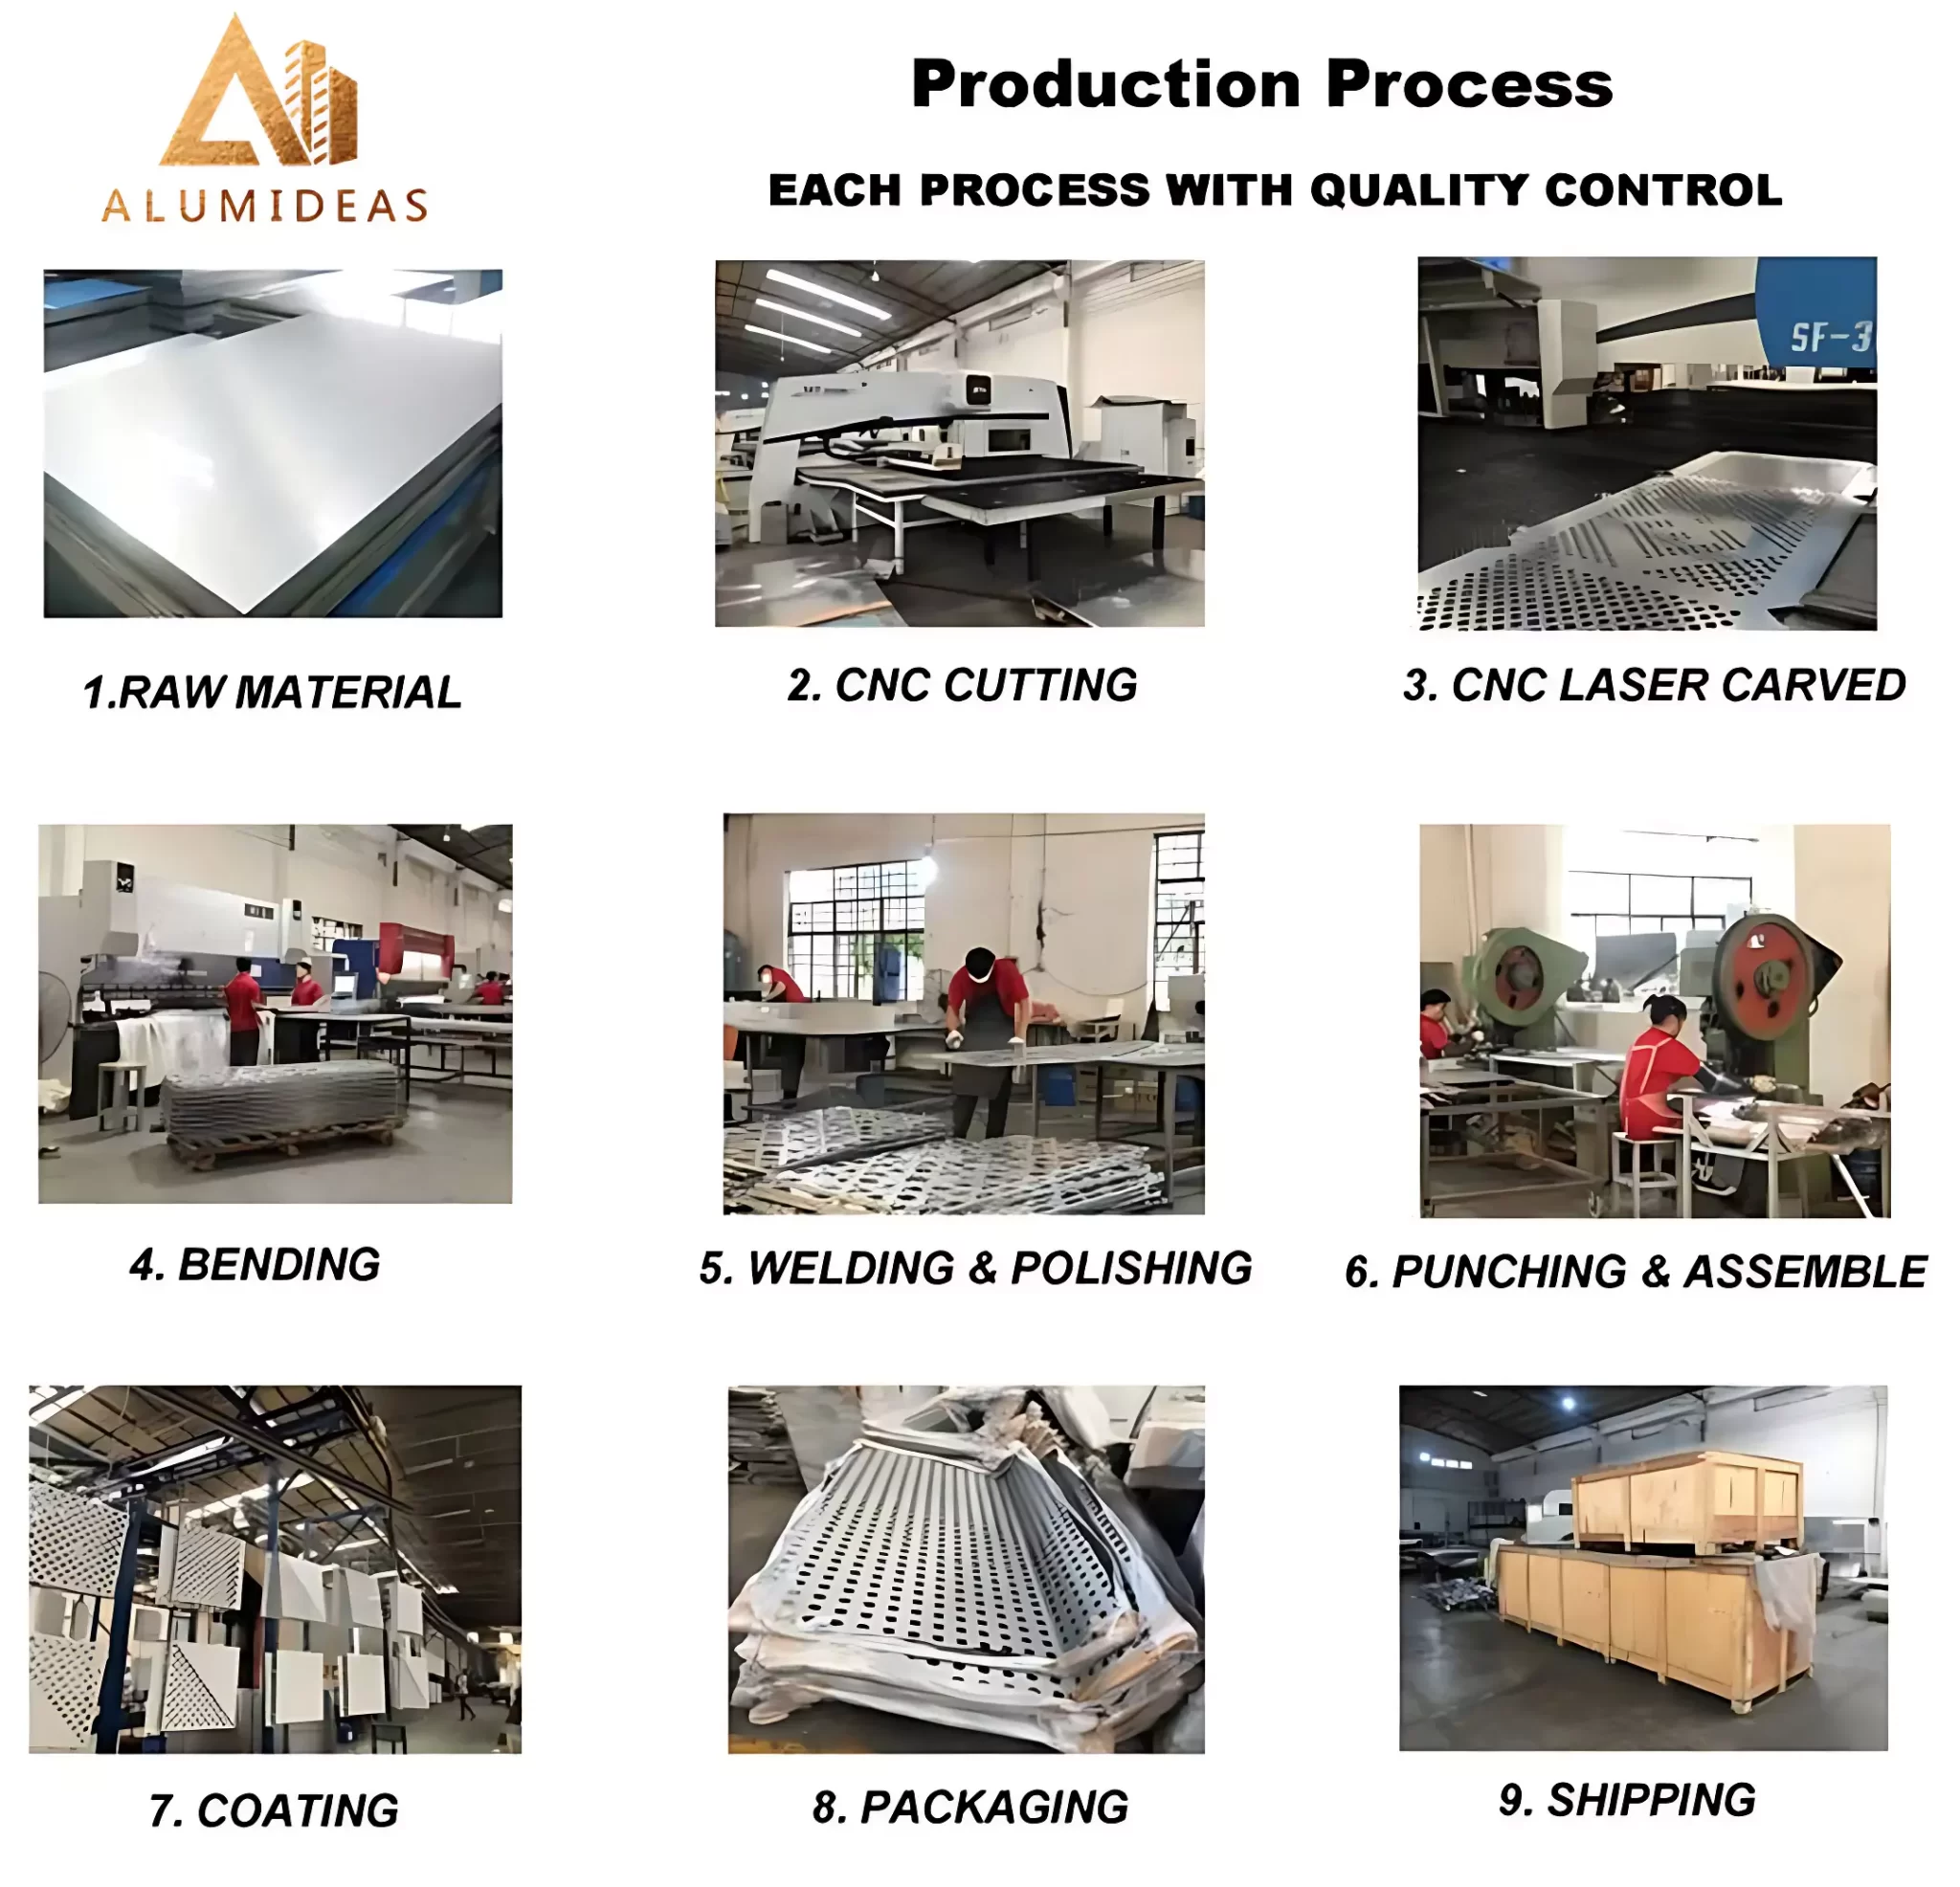 alumideas production workshop display